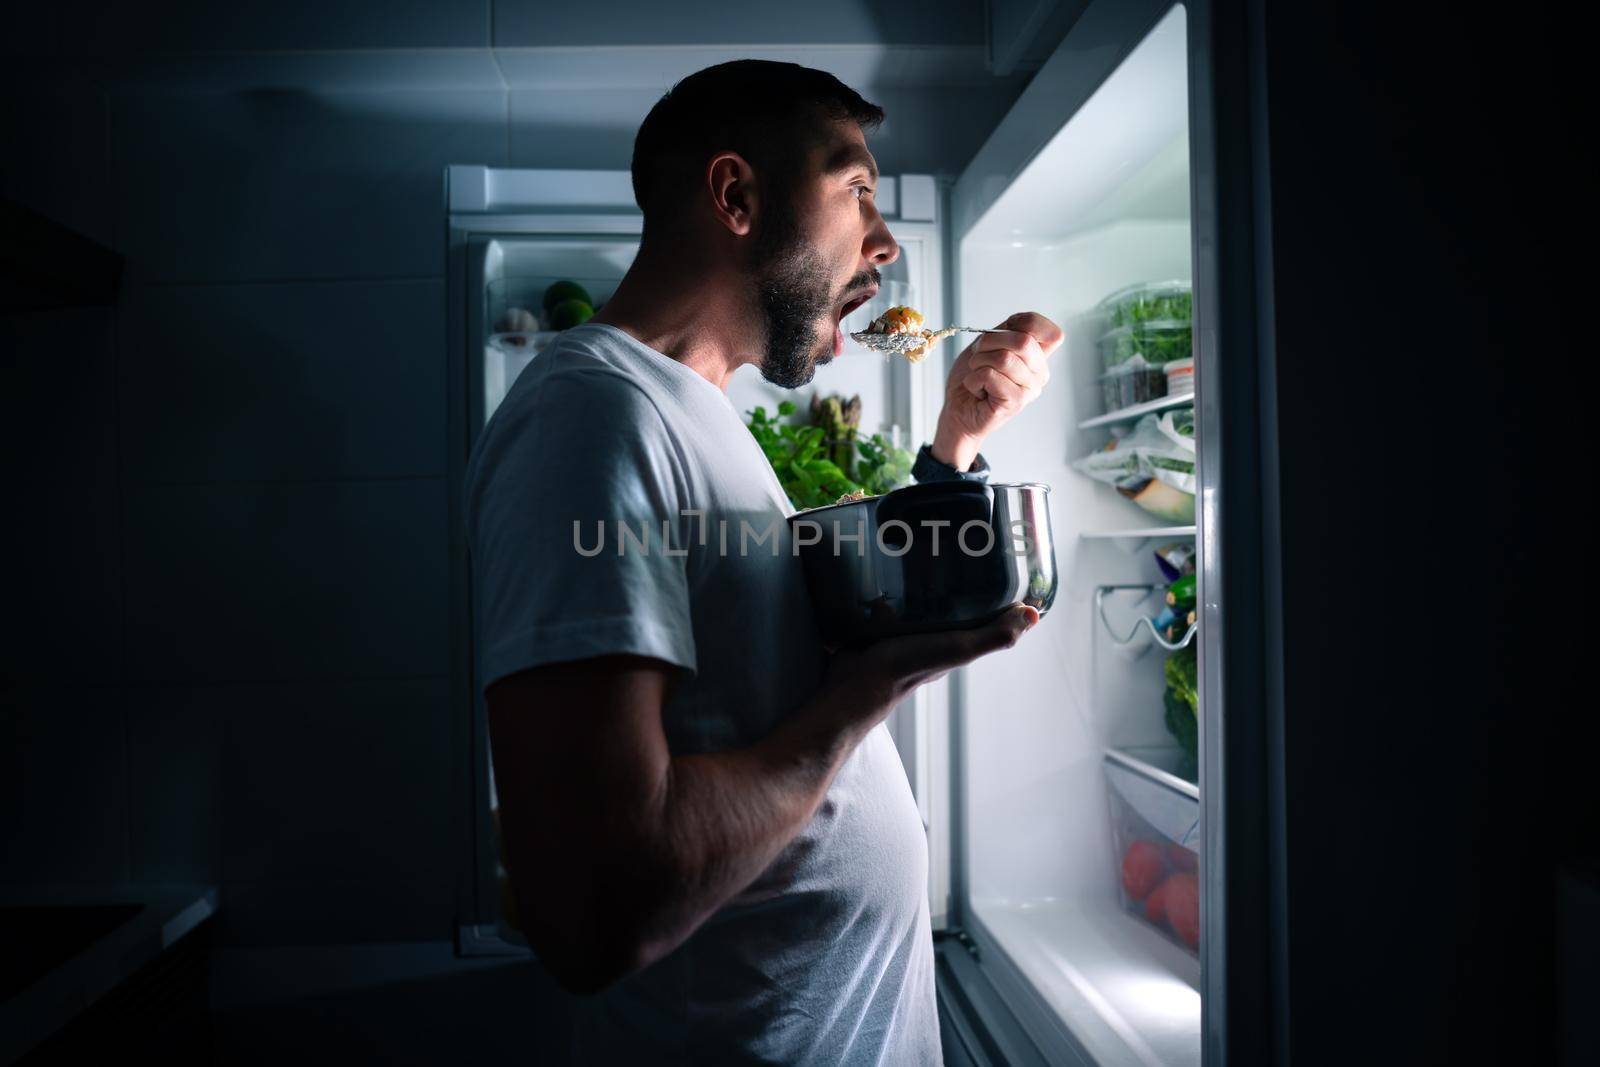 Hungry man eating food at night from open fridge. Man taking midnight snack from refrigerator by DariaKulkova